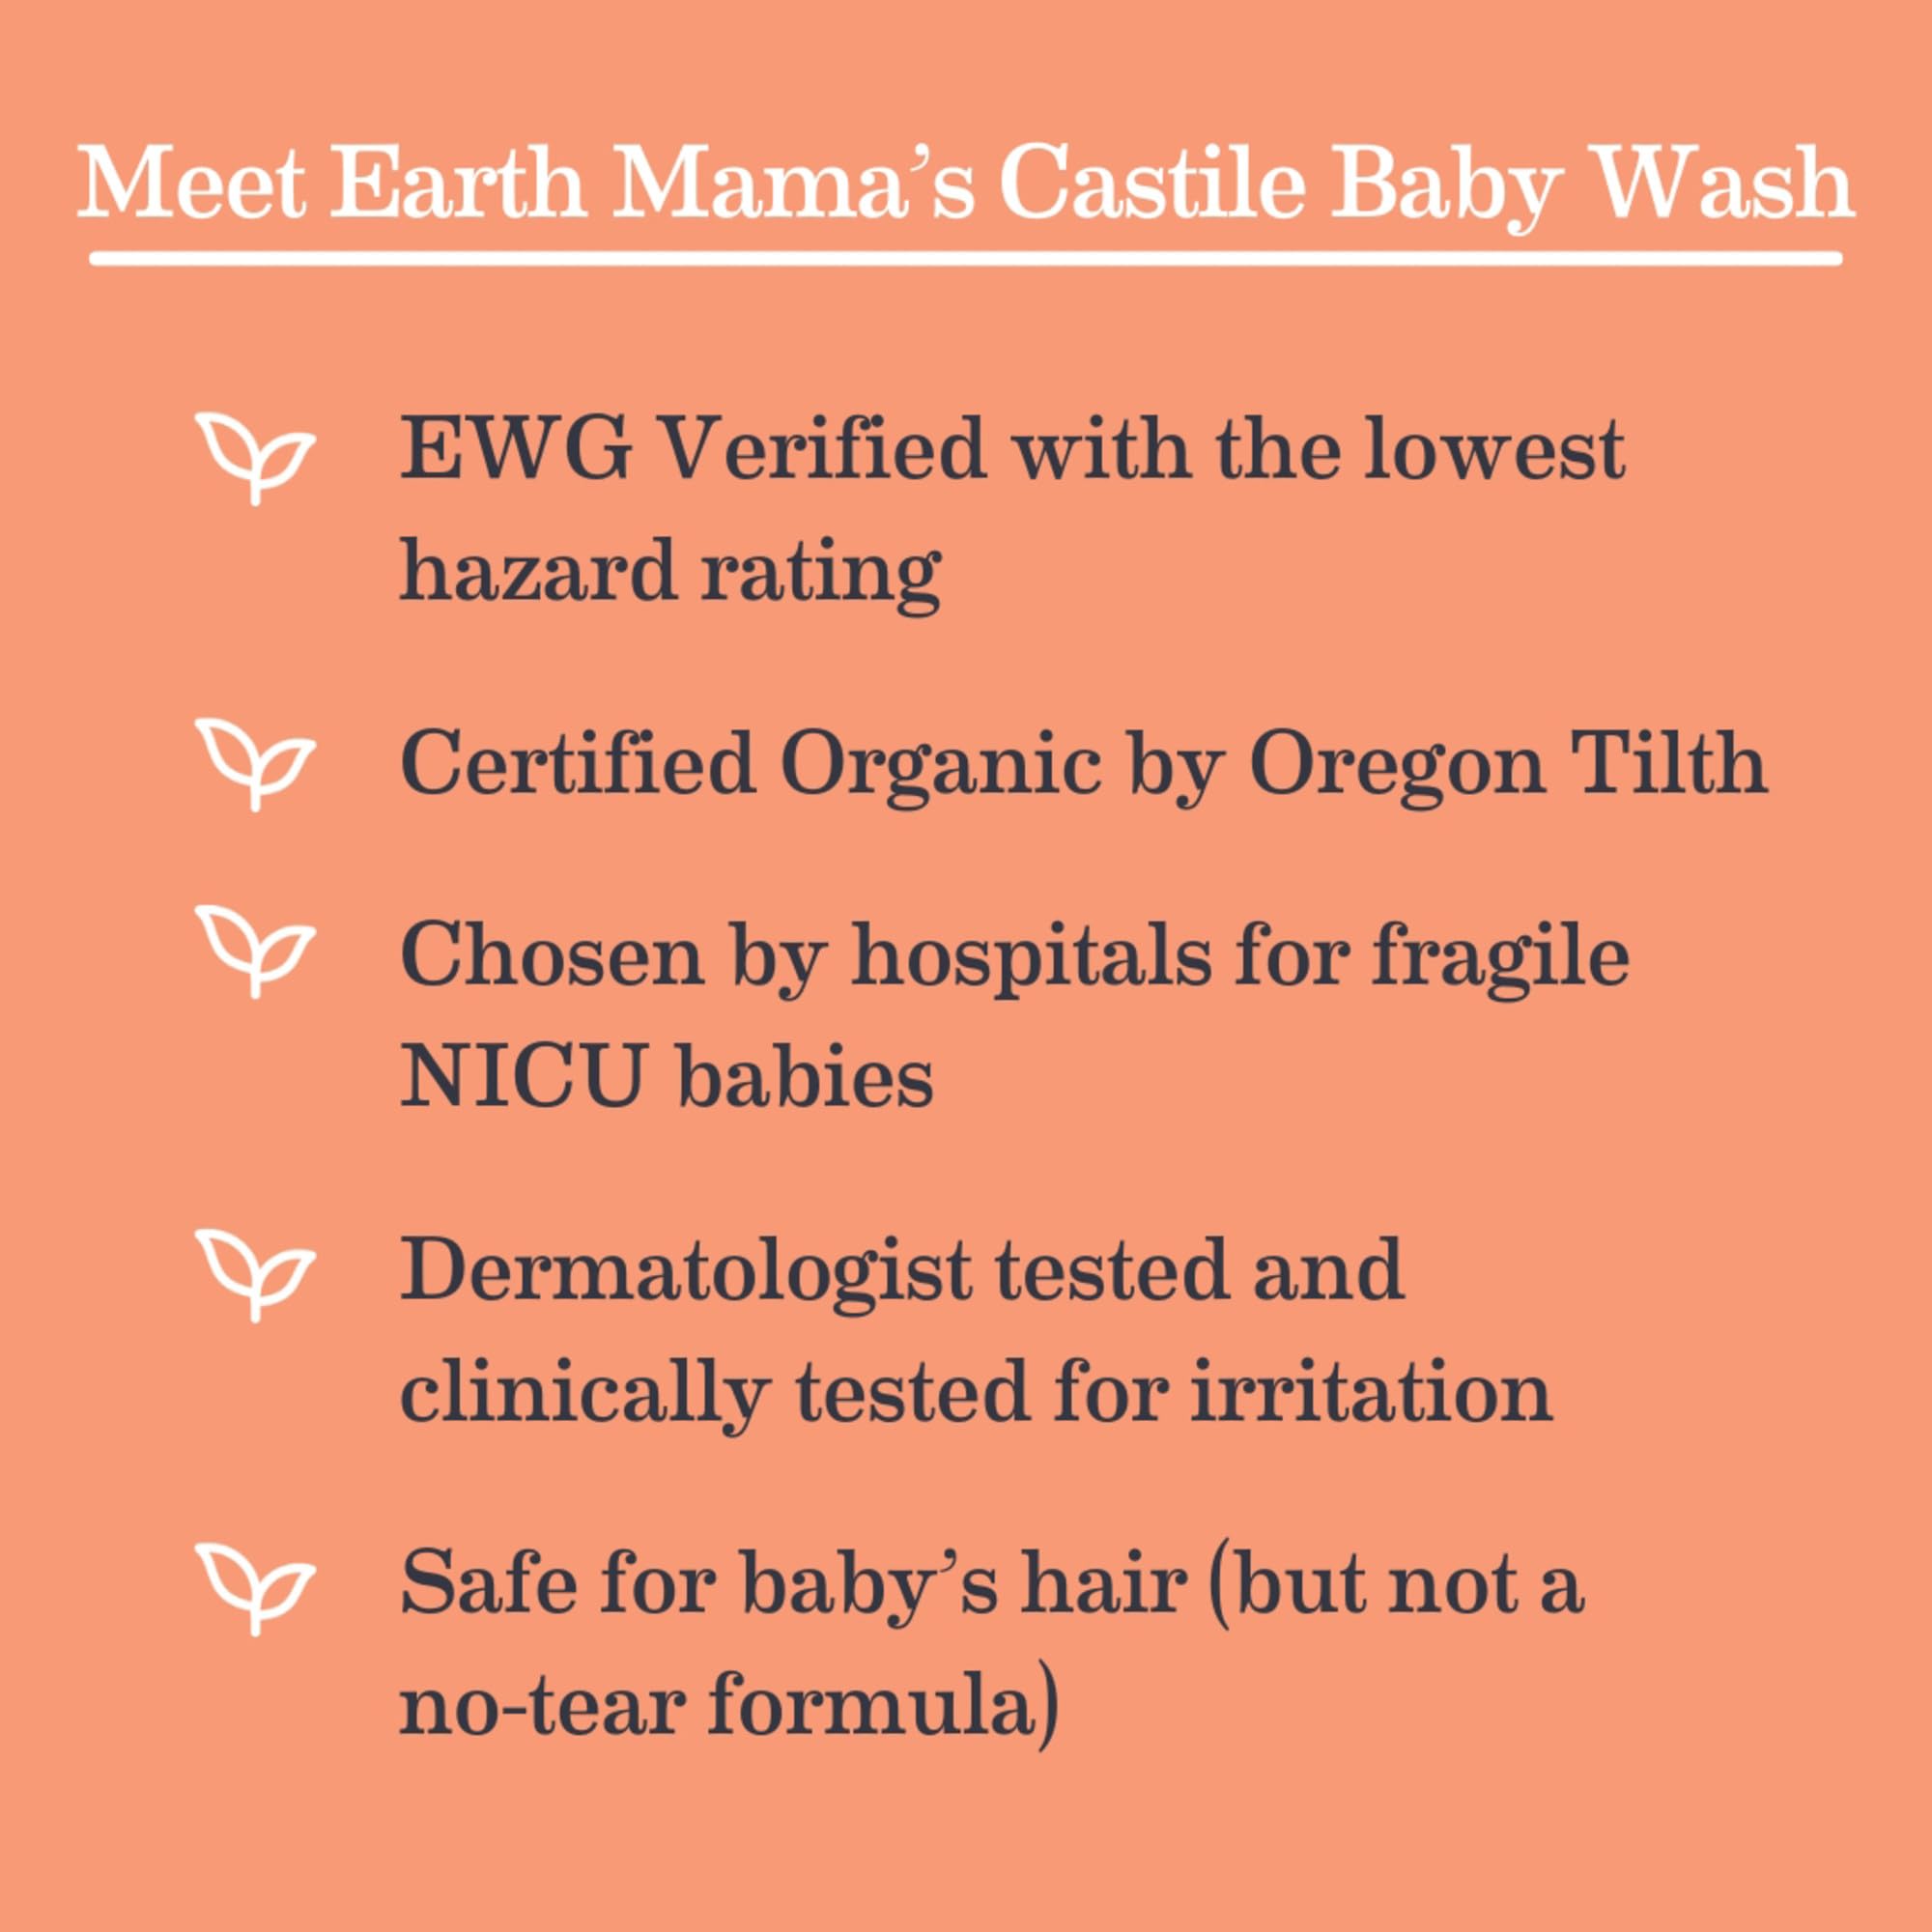 Earth Mama Sweet Orange Foaming Hand & Body Wash Refill | All-Purpose Castile Soap, 34-Fluid Ounce